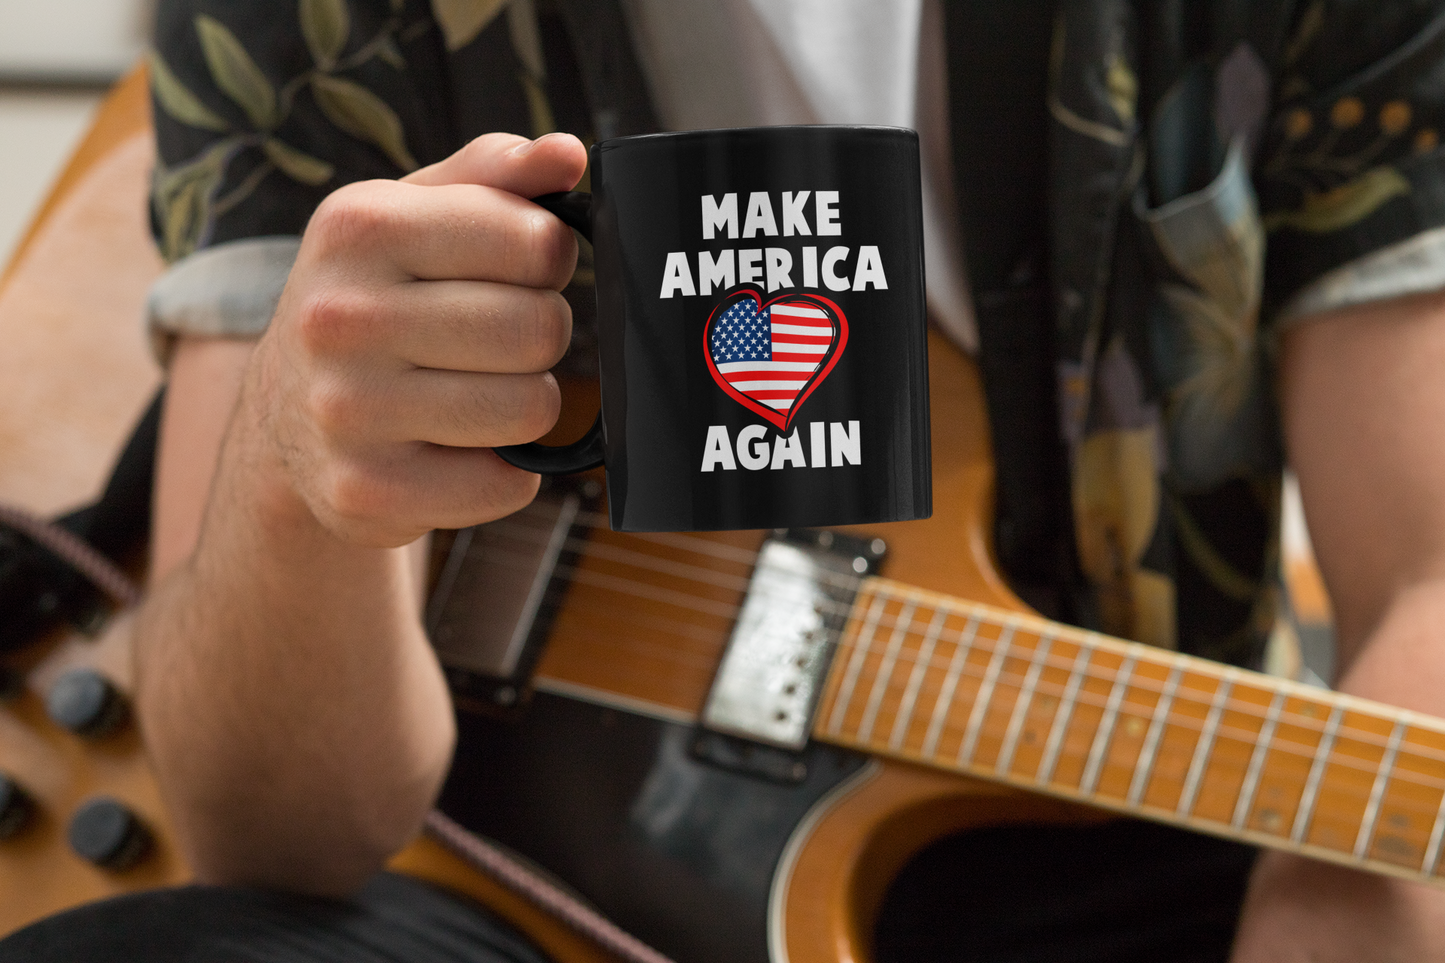 Make America Love Again | Mug